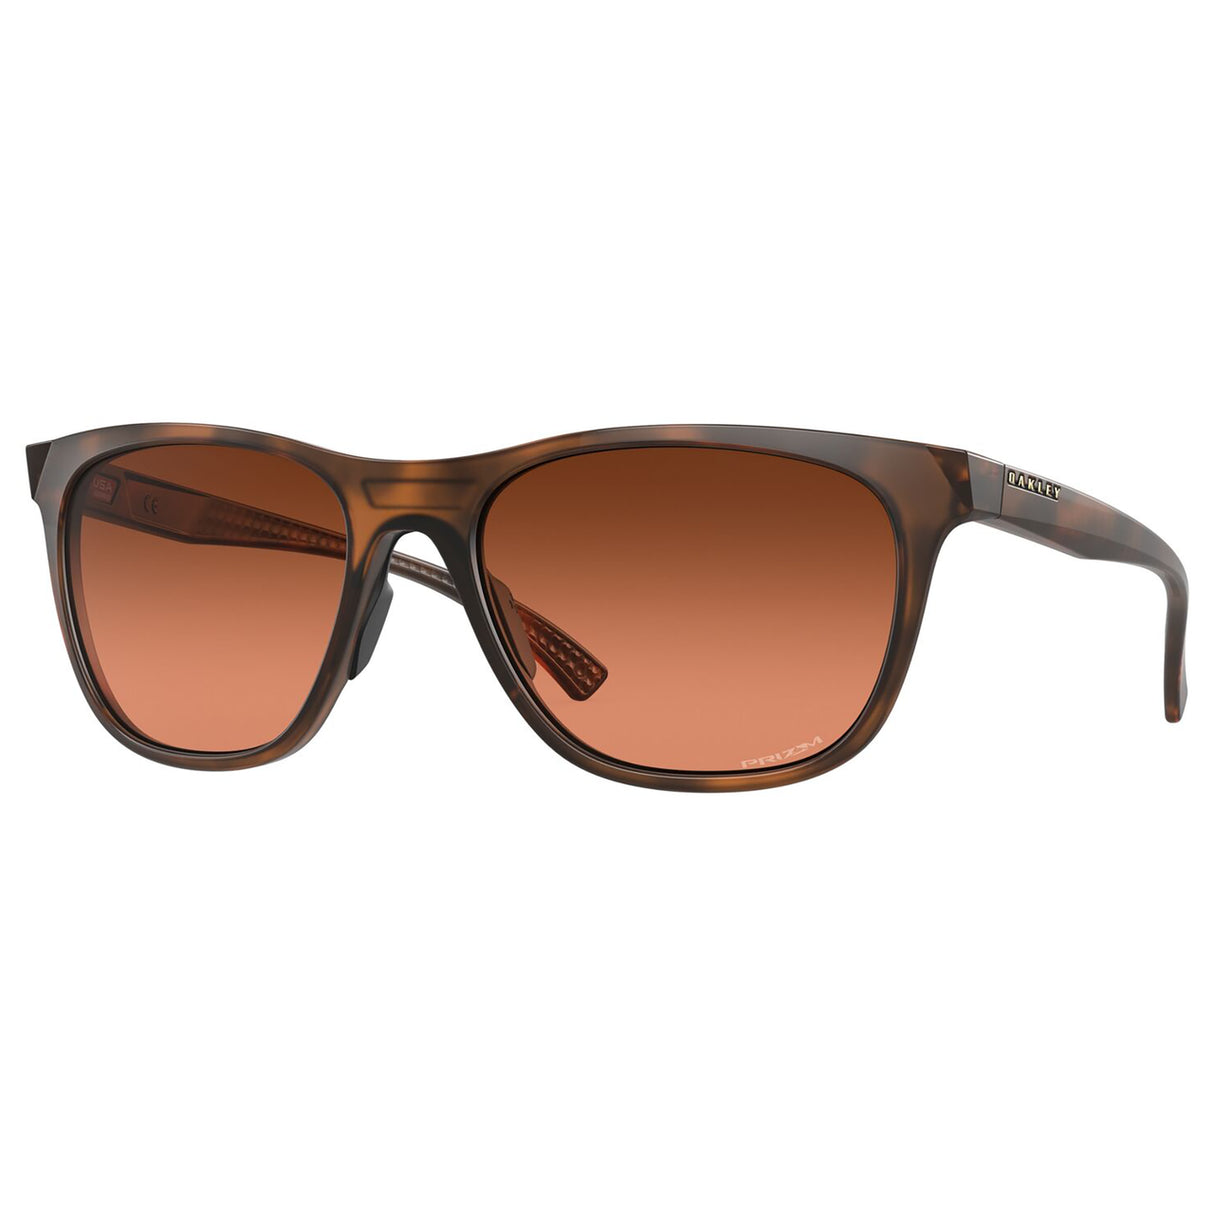 Oakley Leadline Sunglasses (Matte Brown Tortoise) Prizm Brown Gradient Lens